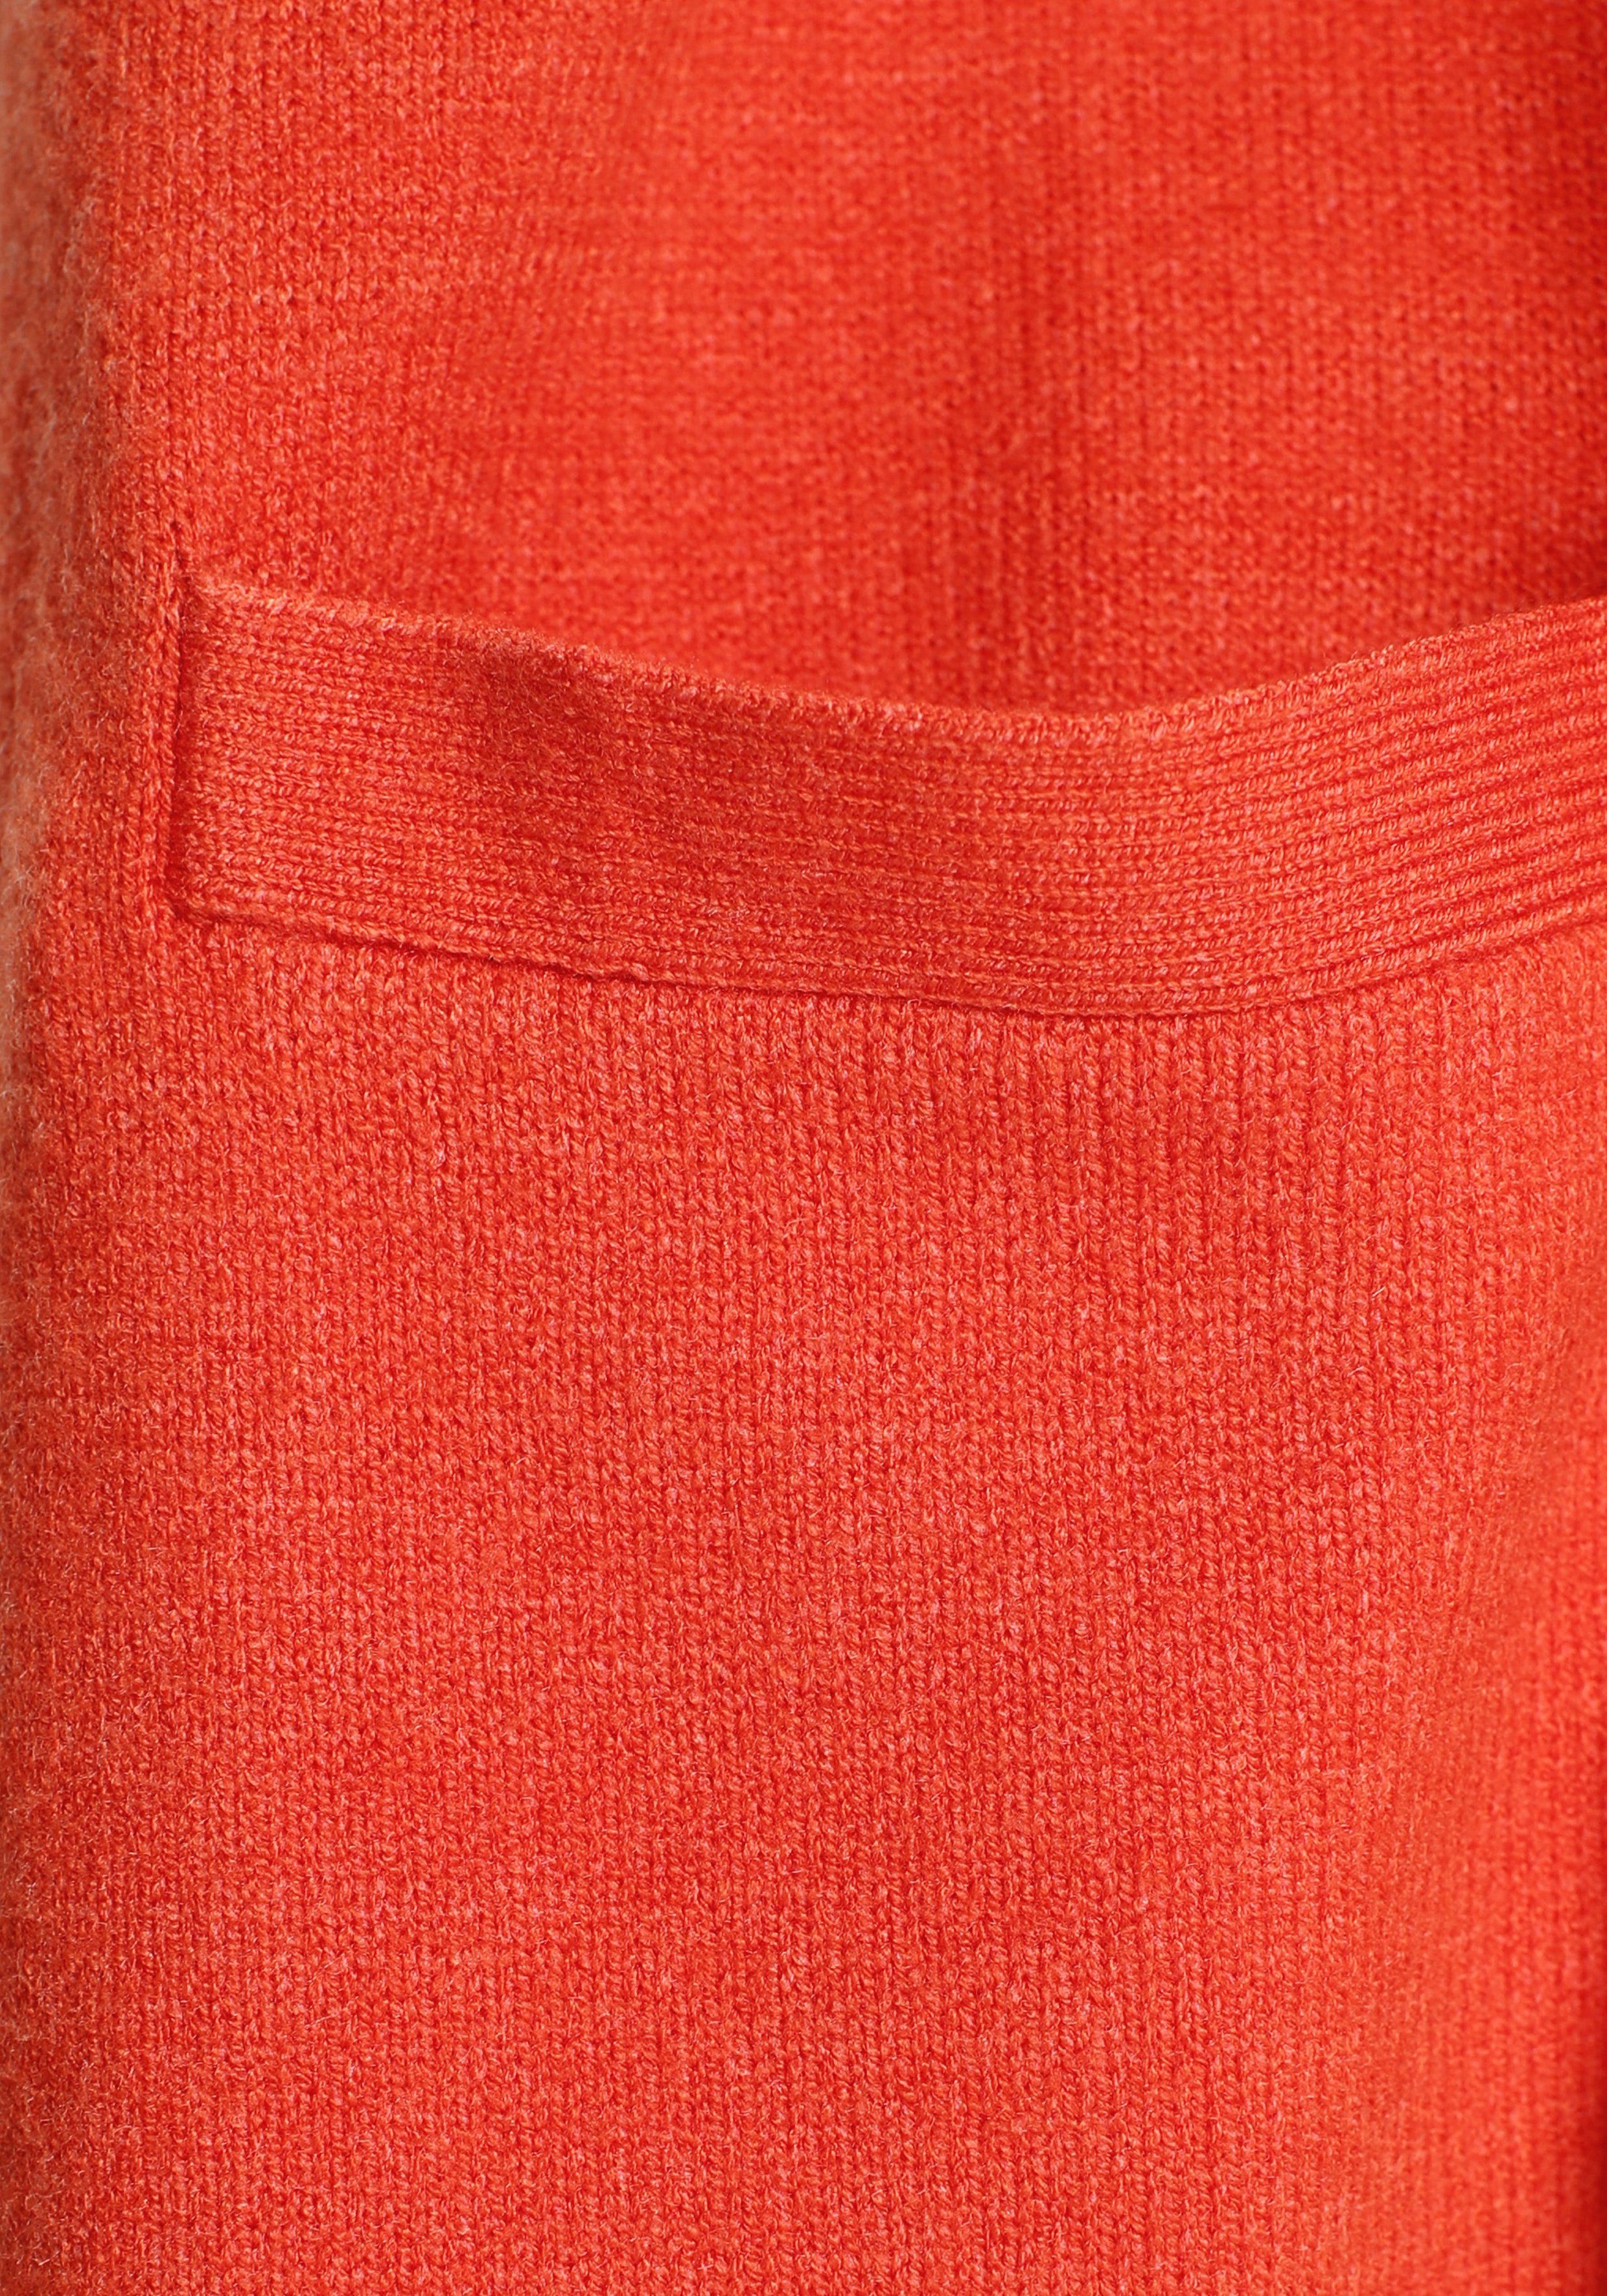 orange-rot Taschen melange Cardigan mit Tamaris